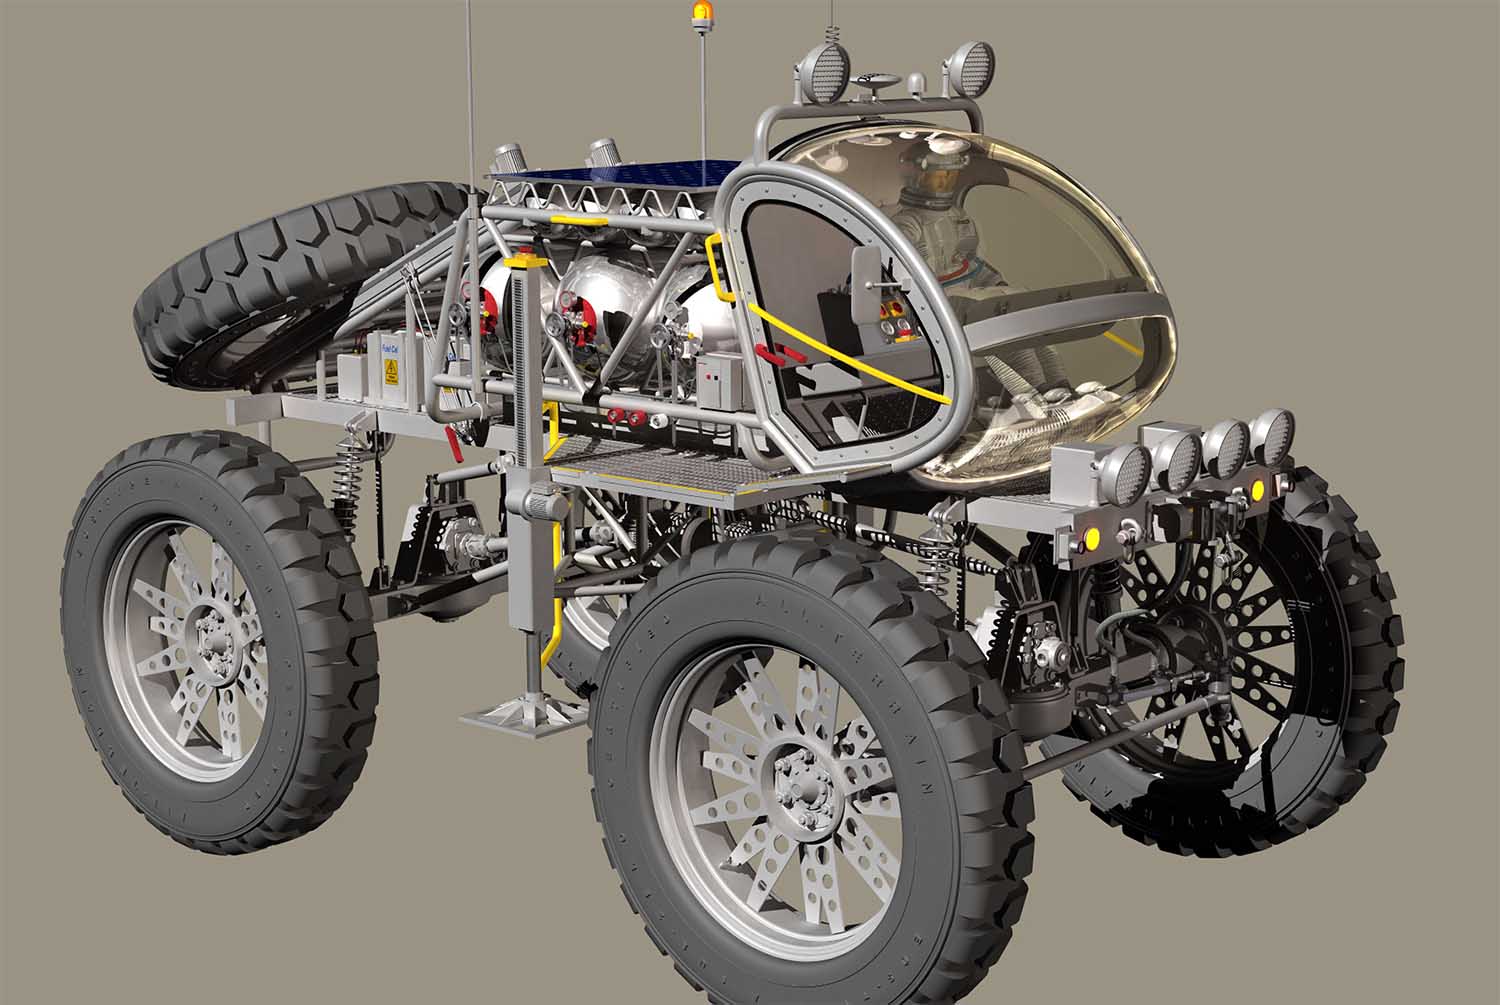 Kaliciak mars rover rendering 2